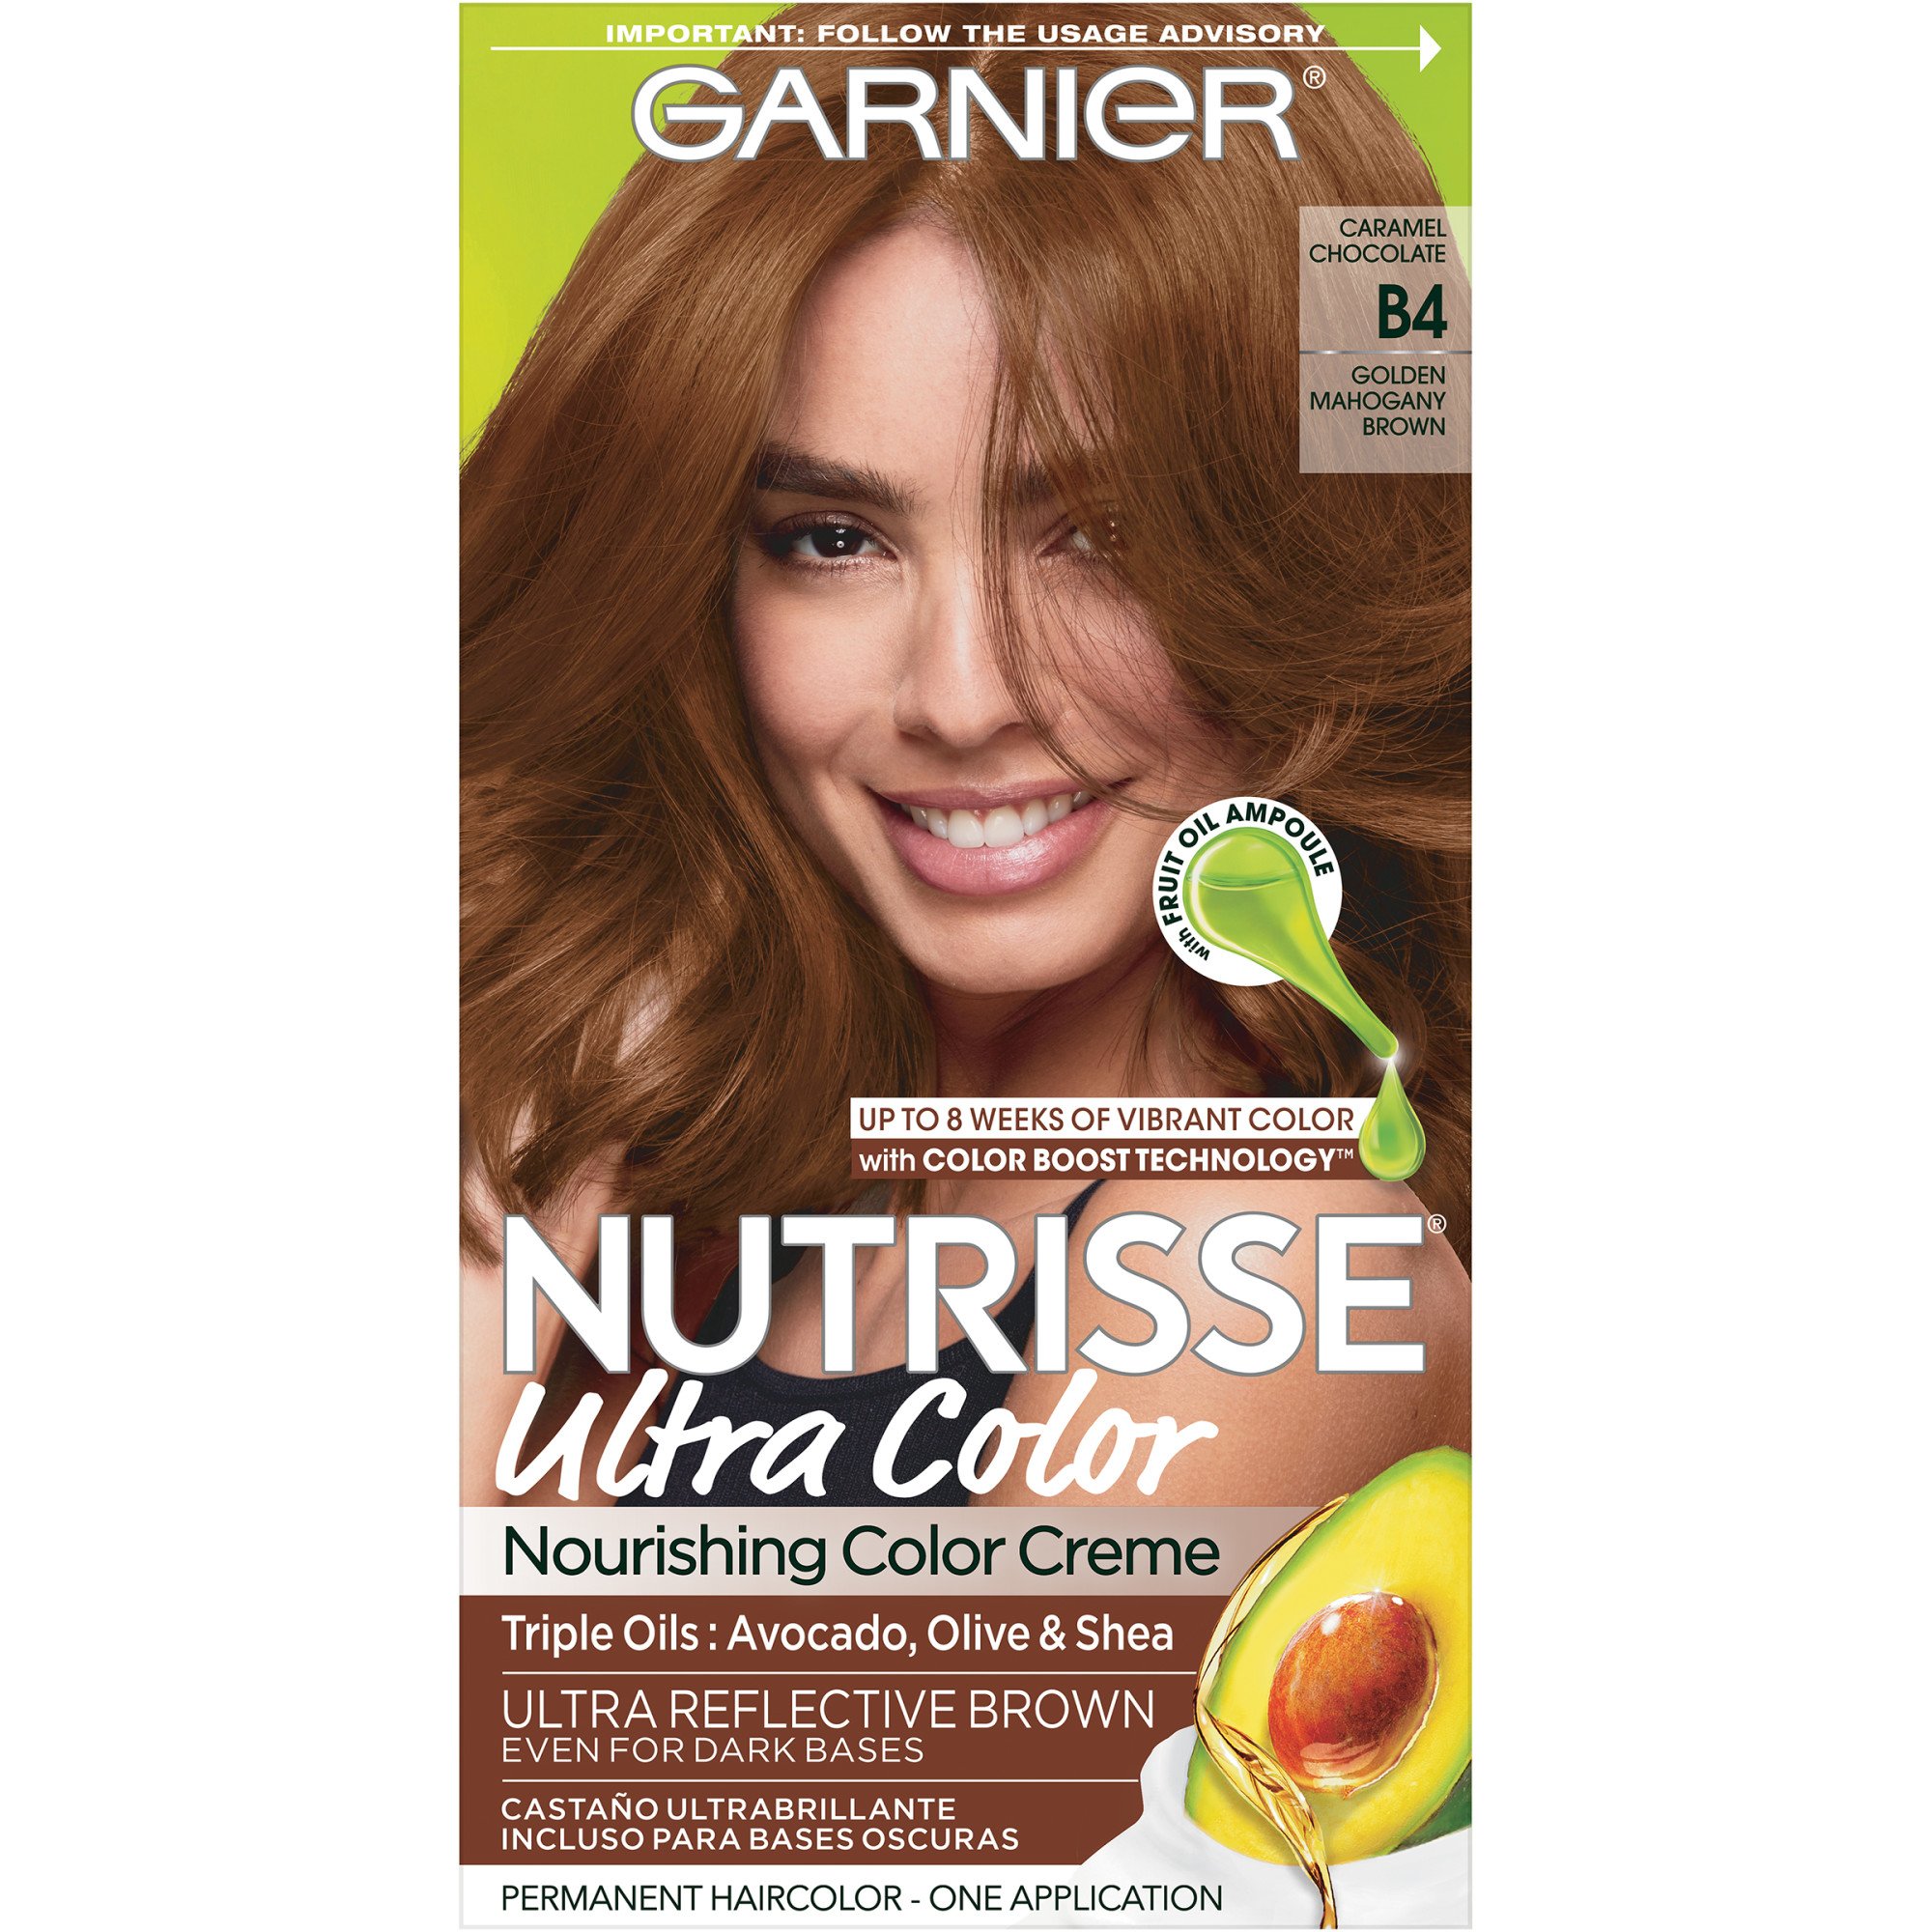 Garnier Nutrisse Ultra Color Nourishing Hair Color Creme B4 Caramel Chocolate Shop Hair Color At H E B